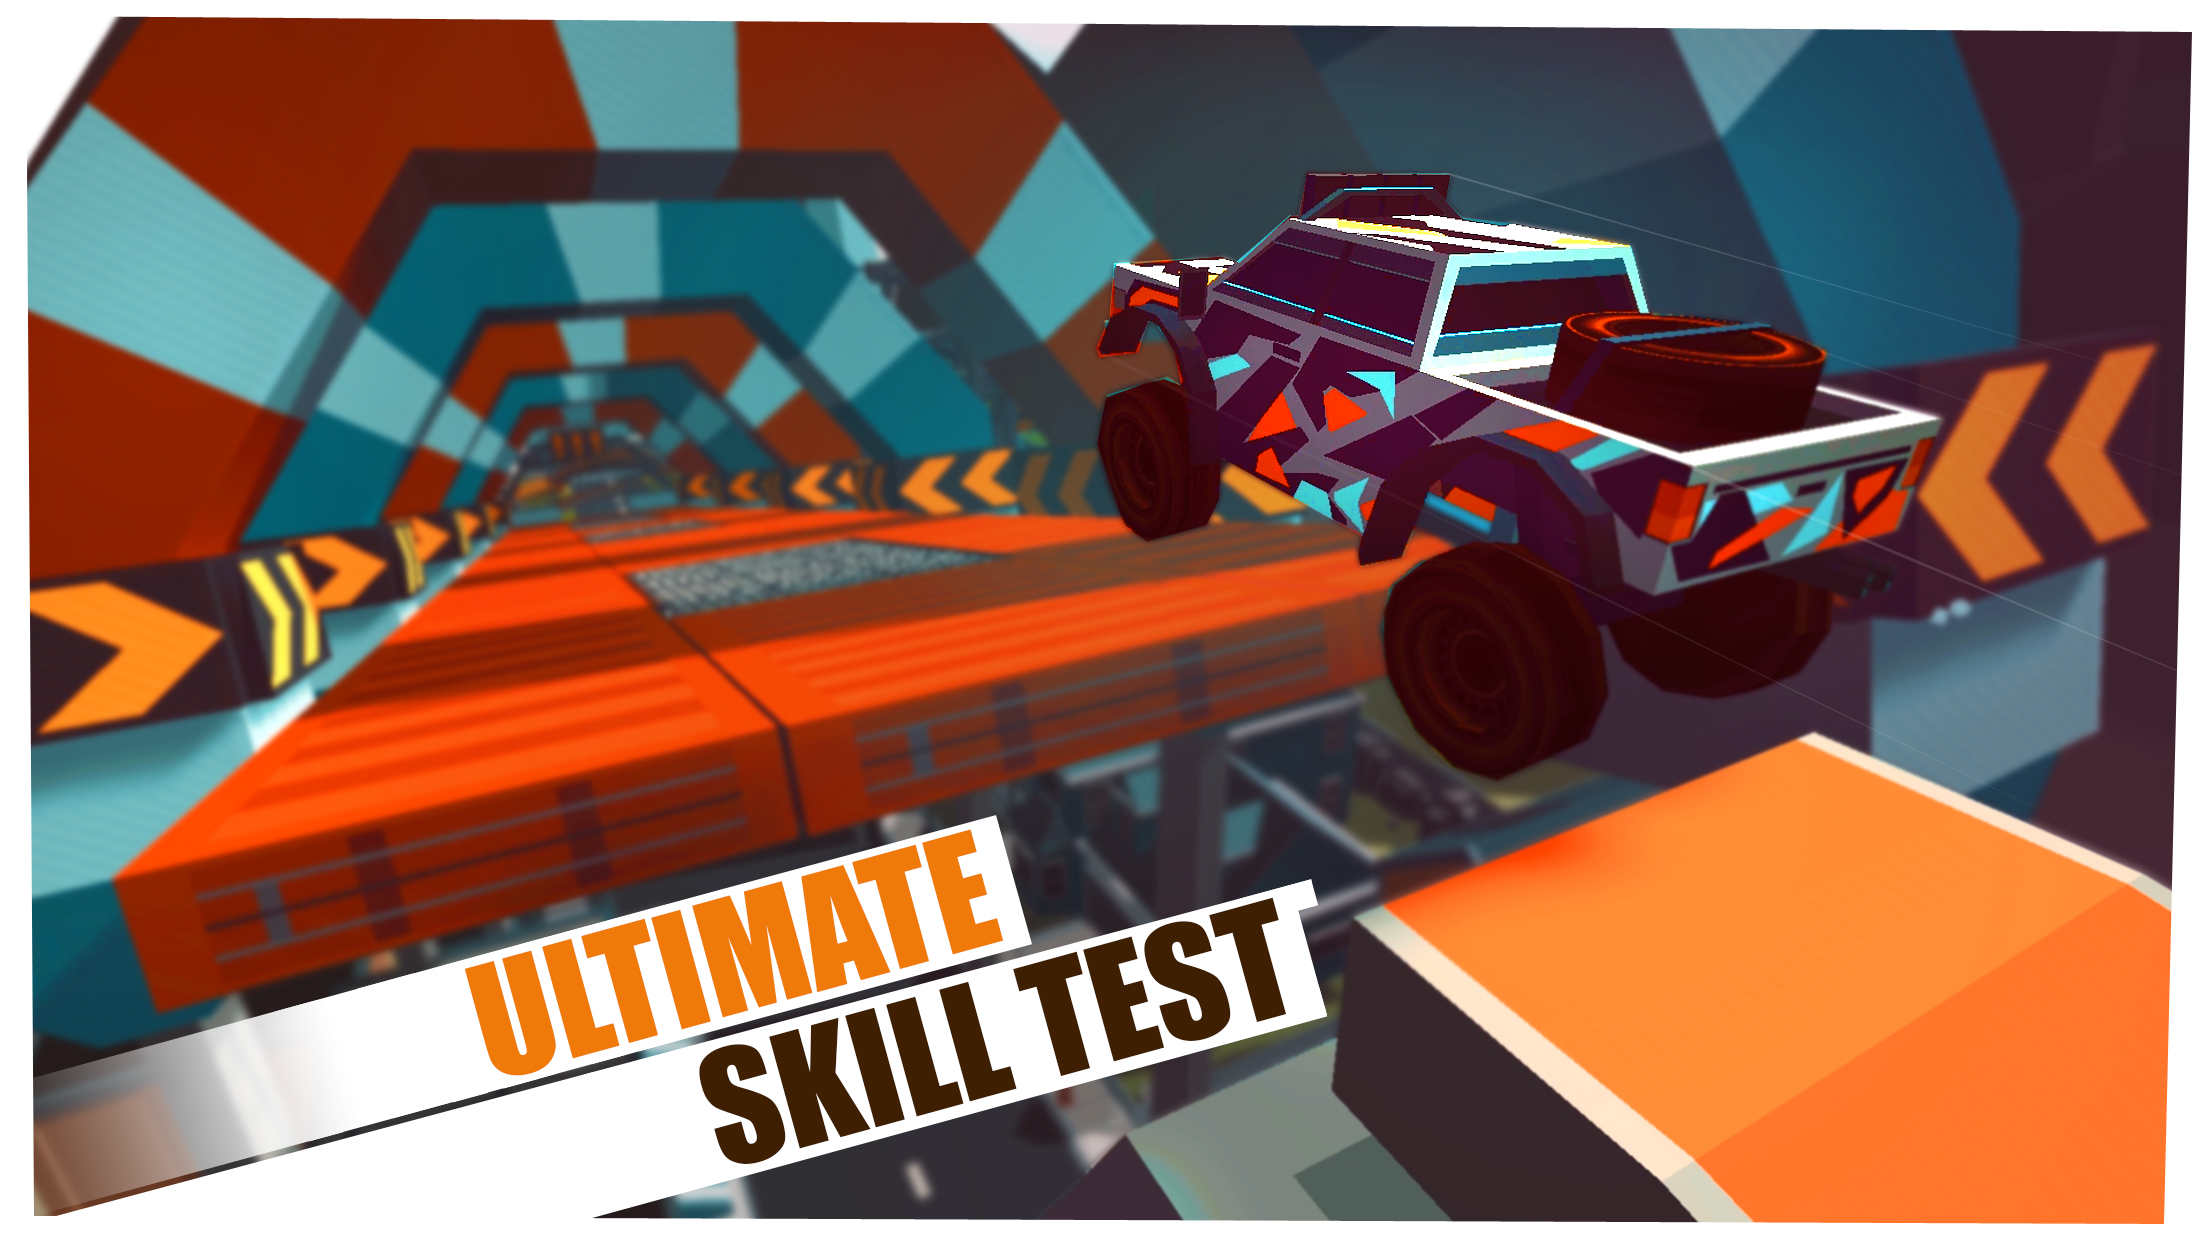 Screenshot 1 of Skill Test - Extreme Stunts Racing Game 2020 2.2.0